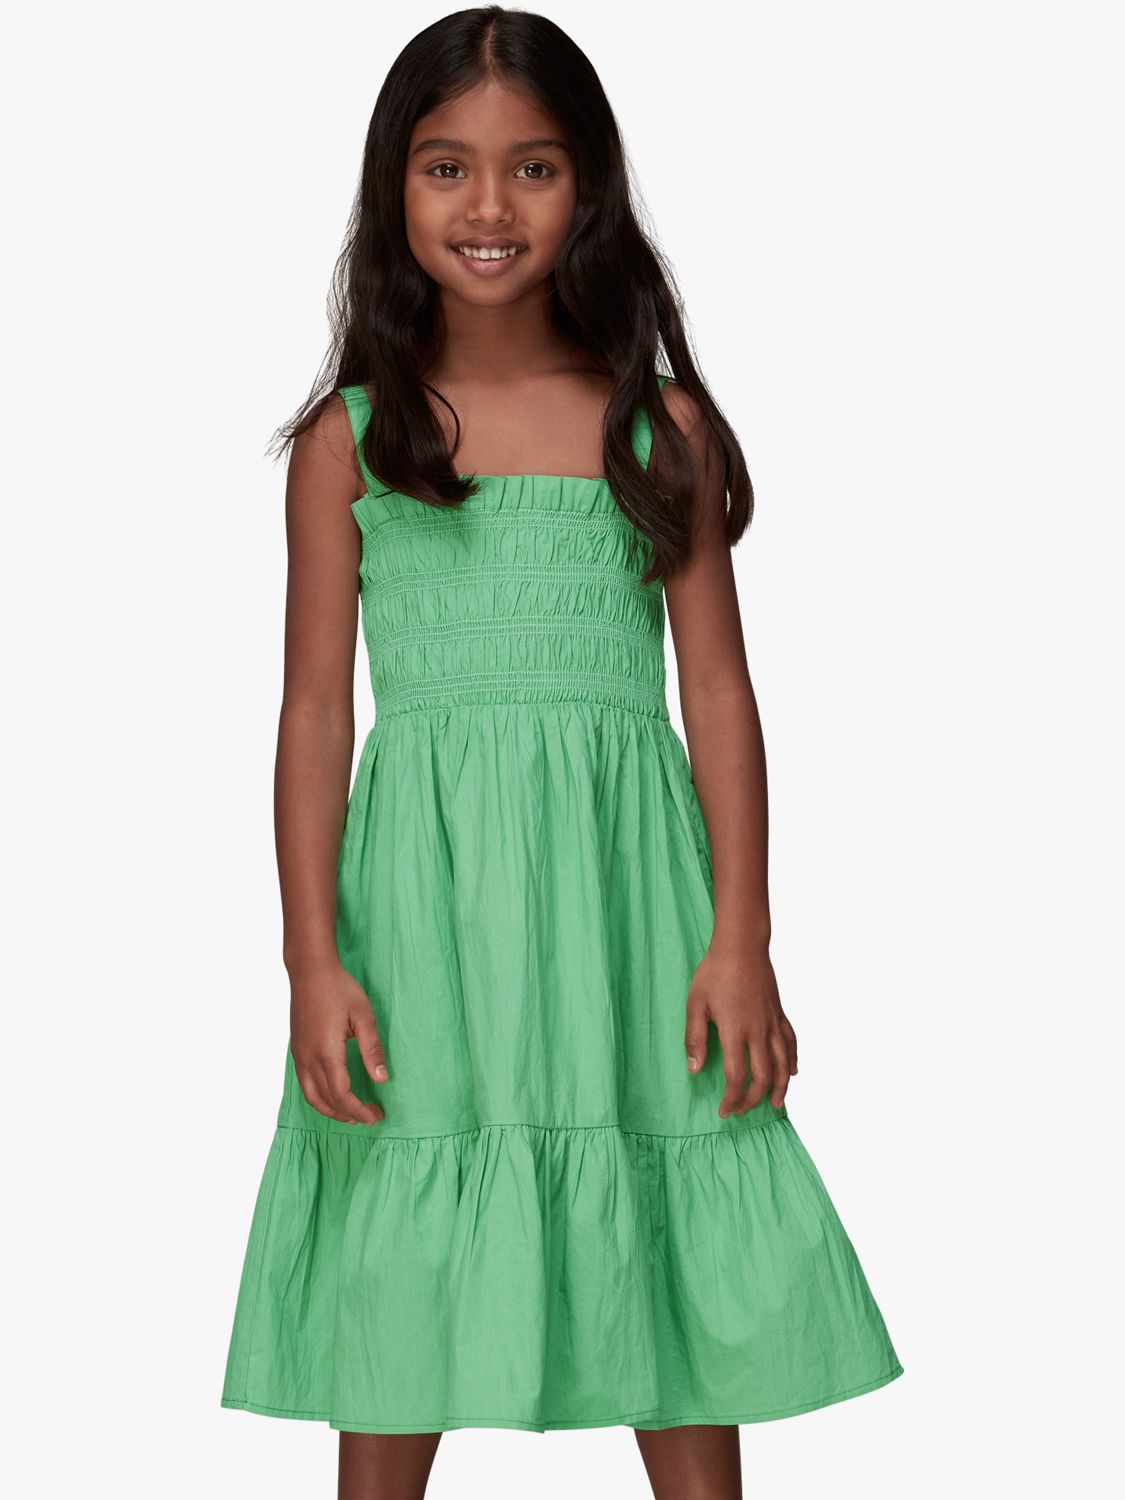 Whistles Kids' Penelope Cotton Sundress, Green, 4-5 years